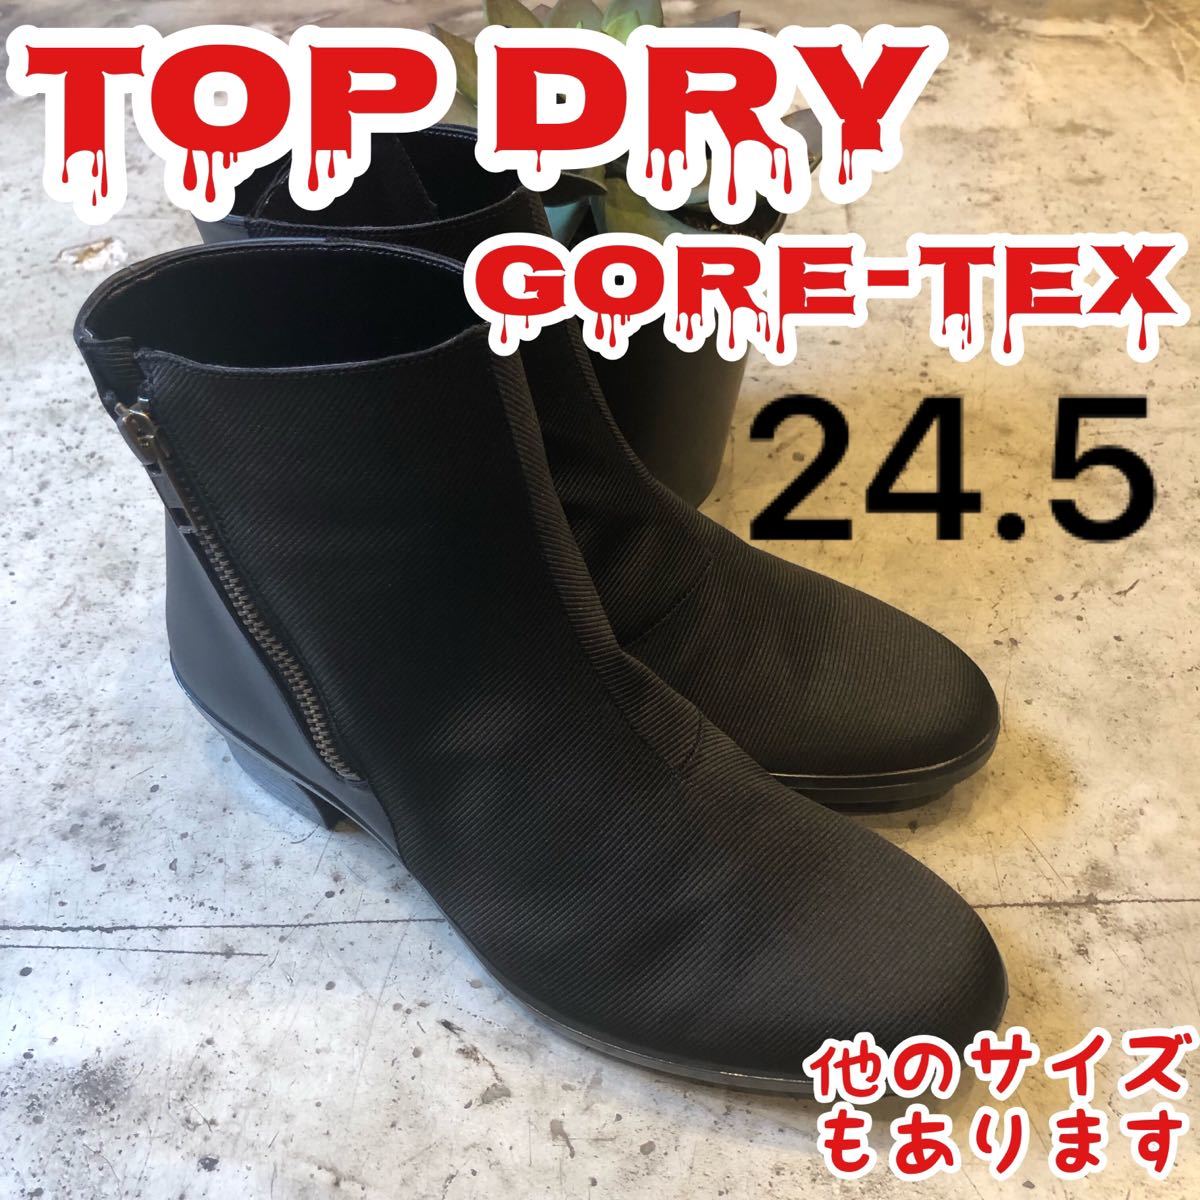 TOPDRY トップドライ GORETEX 強防水 氷上防滑 ブーツ 黒 23 5 3969